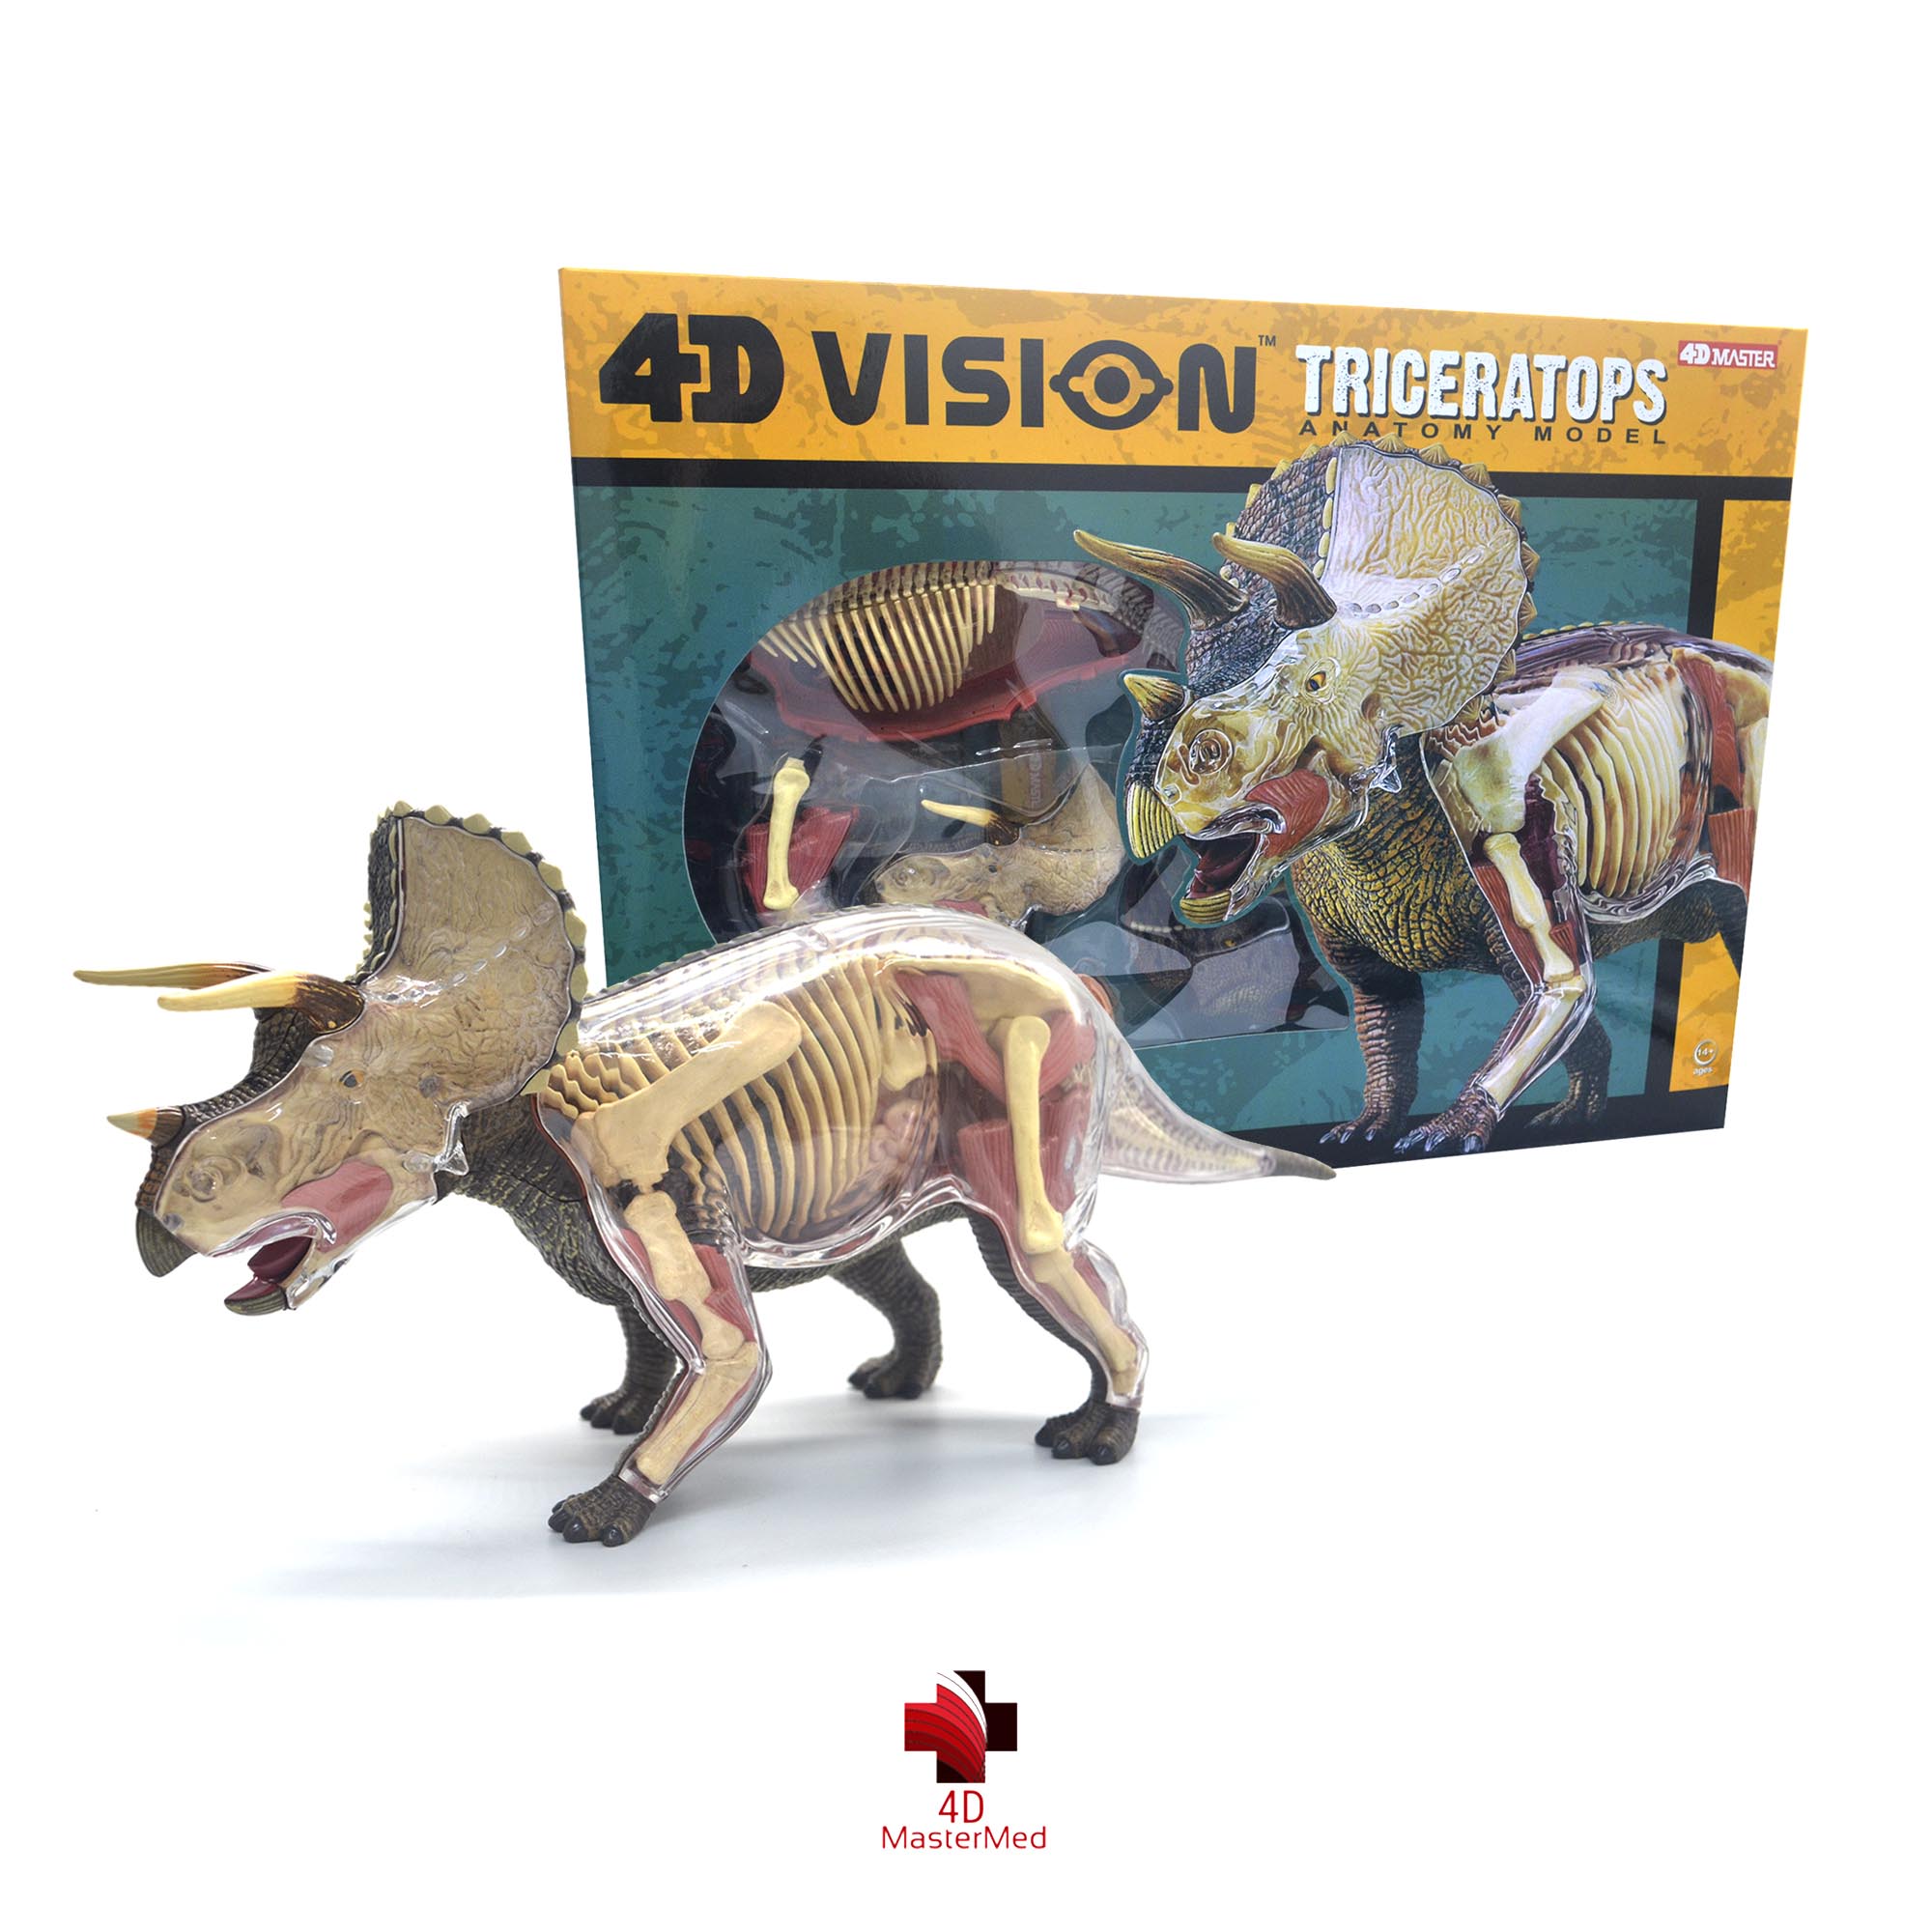 Anatomia do Triceratops - 4D MasterMed